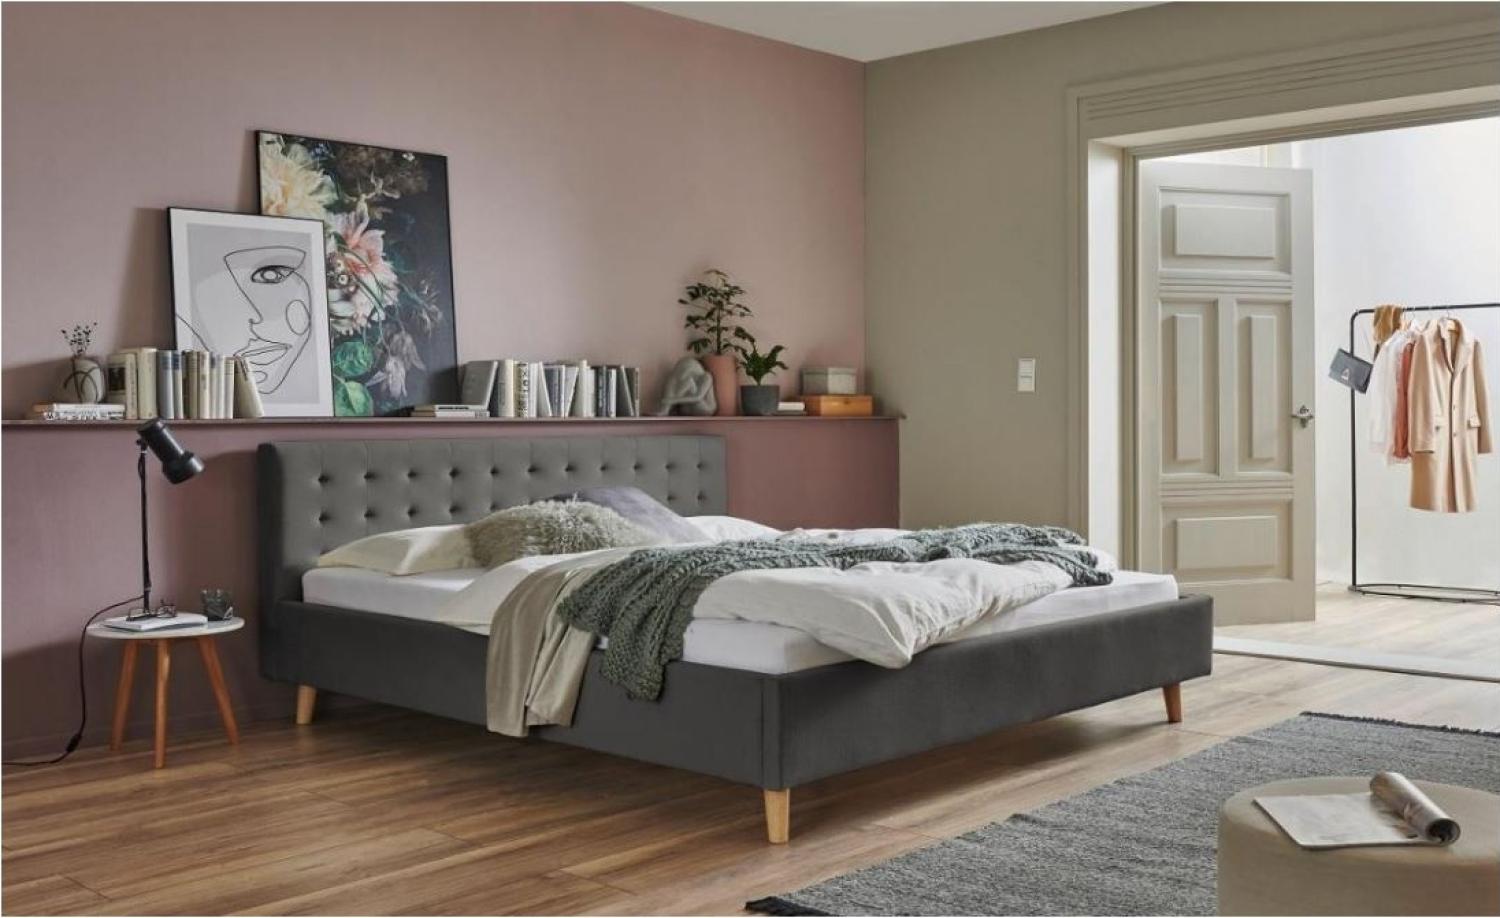 Polsterbett Bett Modell Paros Farbe grau 180x200cm Bild 1